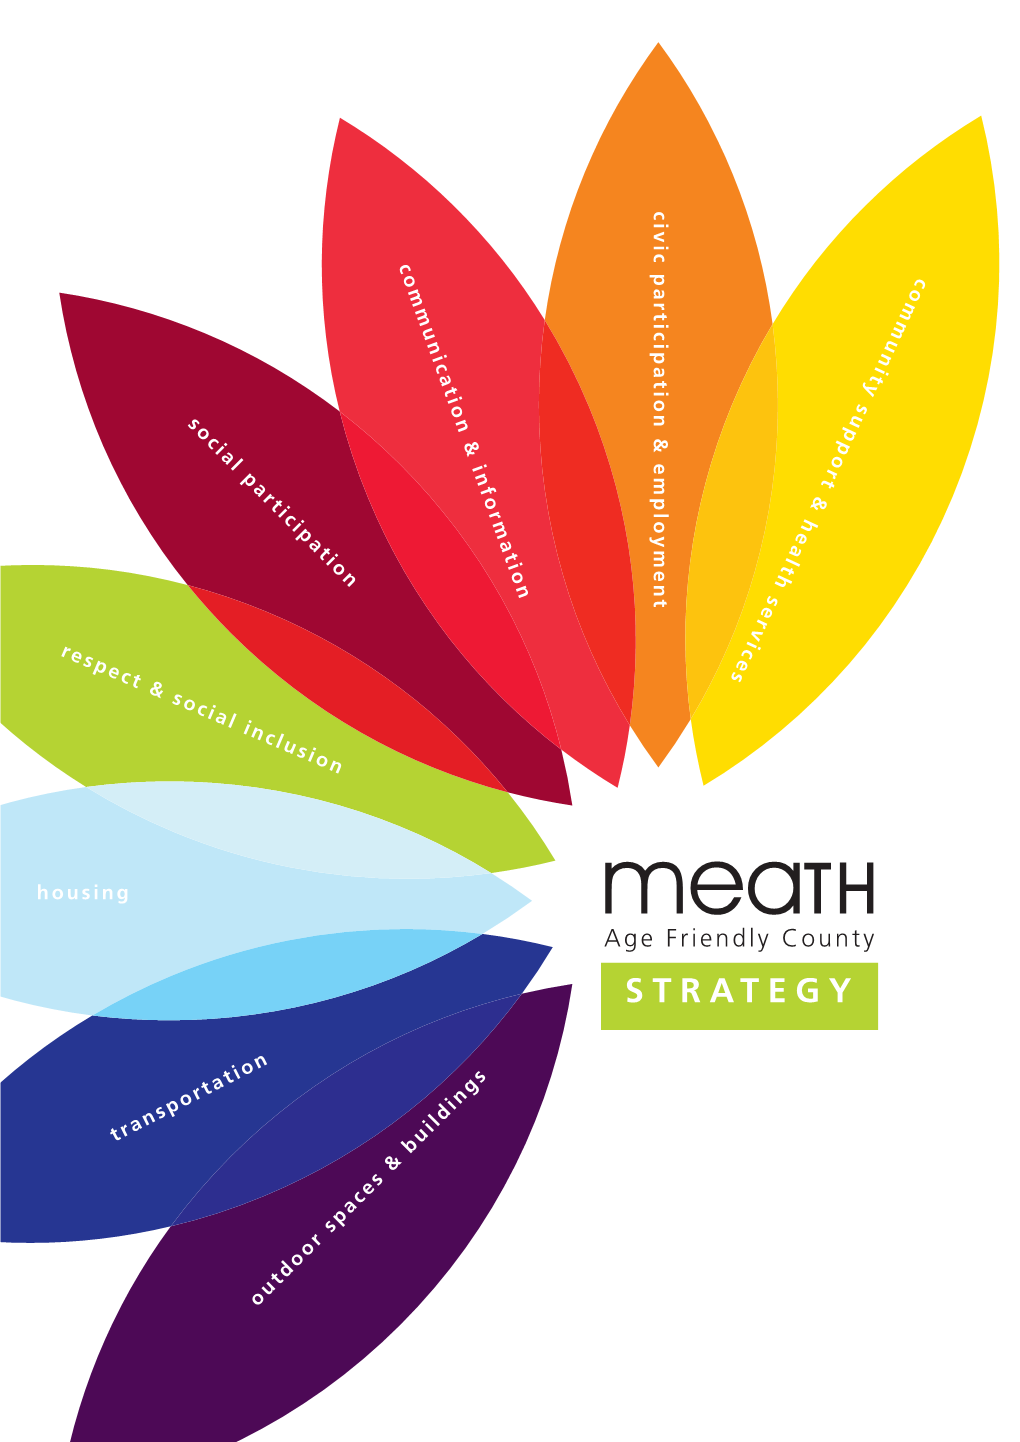 Meath Age Friendly County Strategy